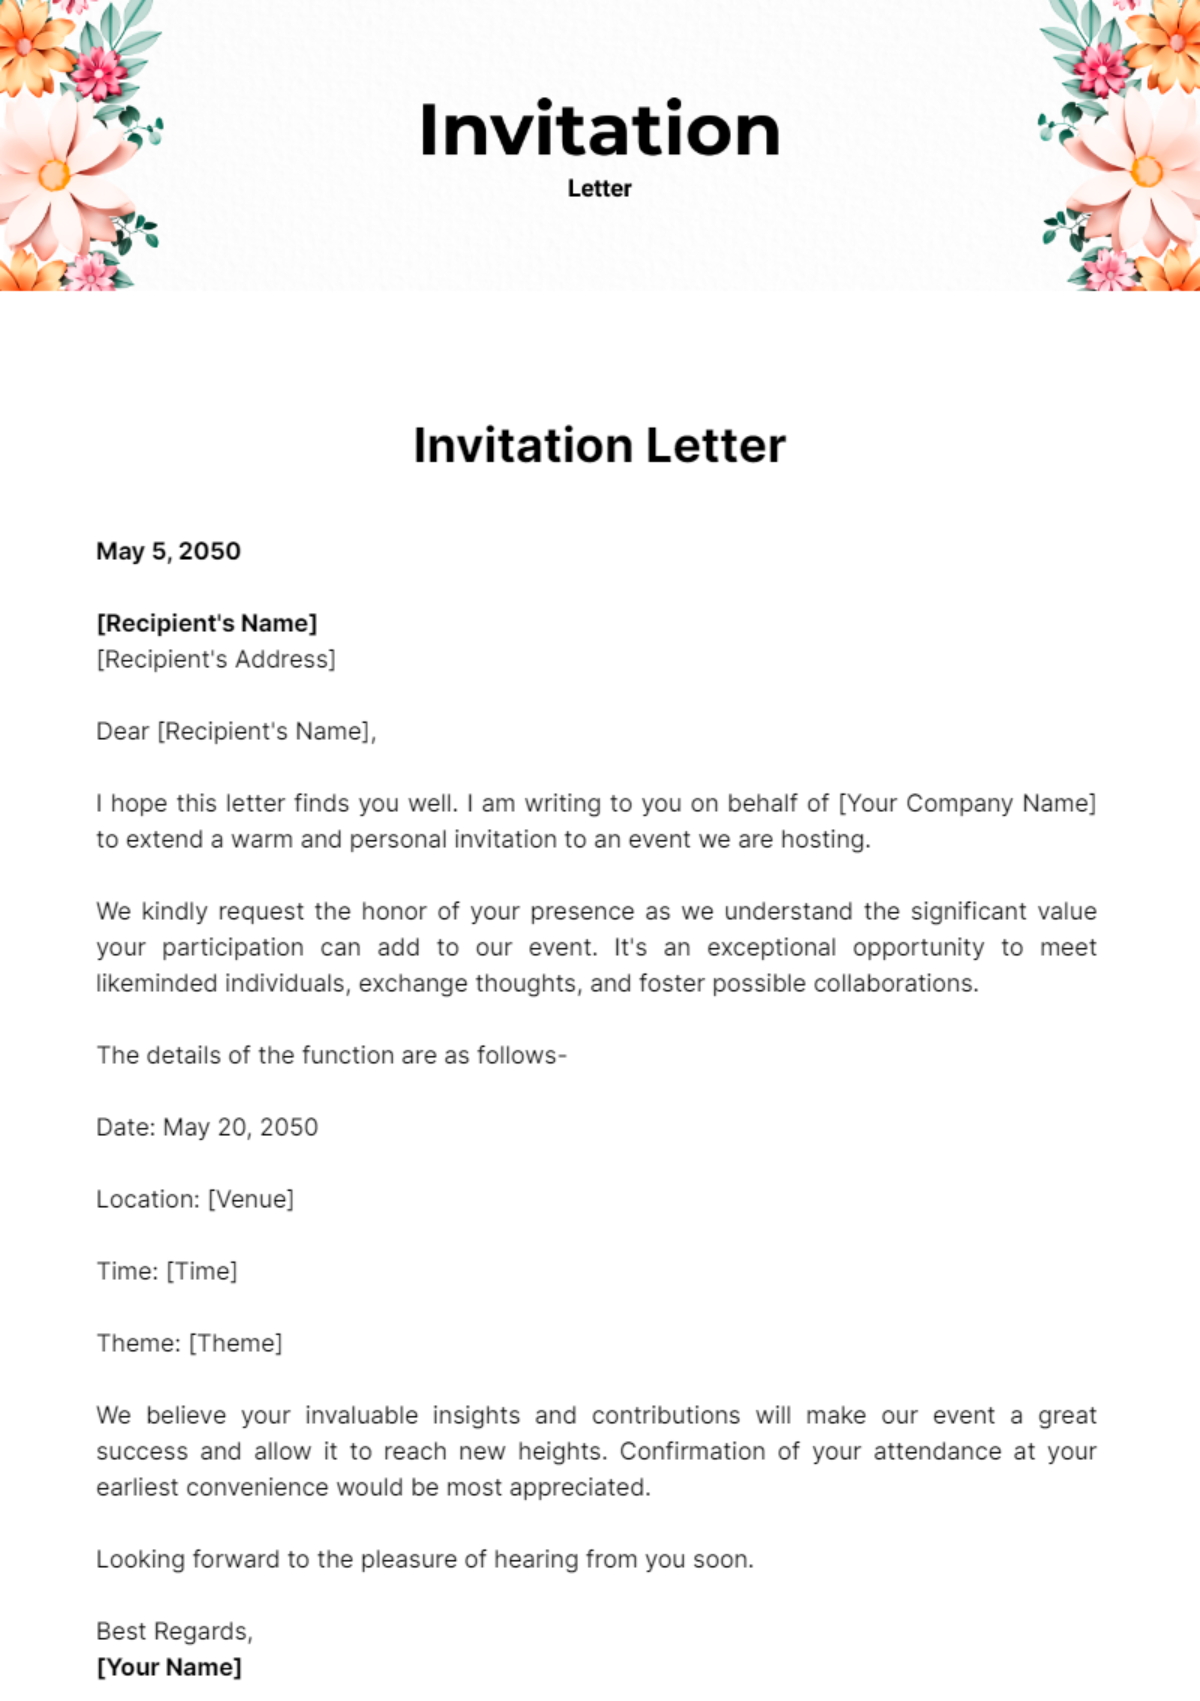 Free Invitation Letter Template